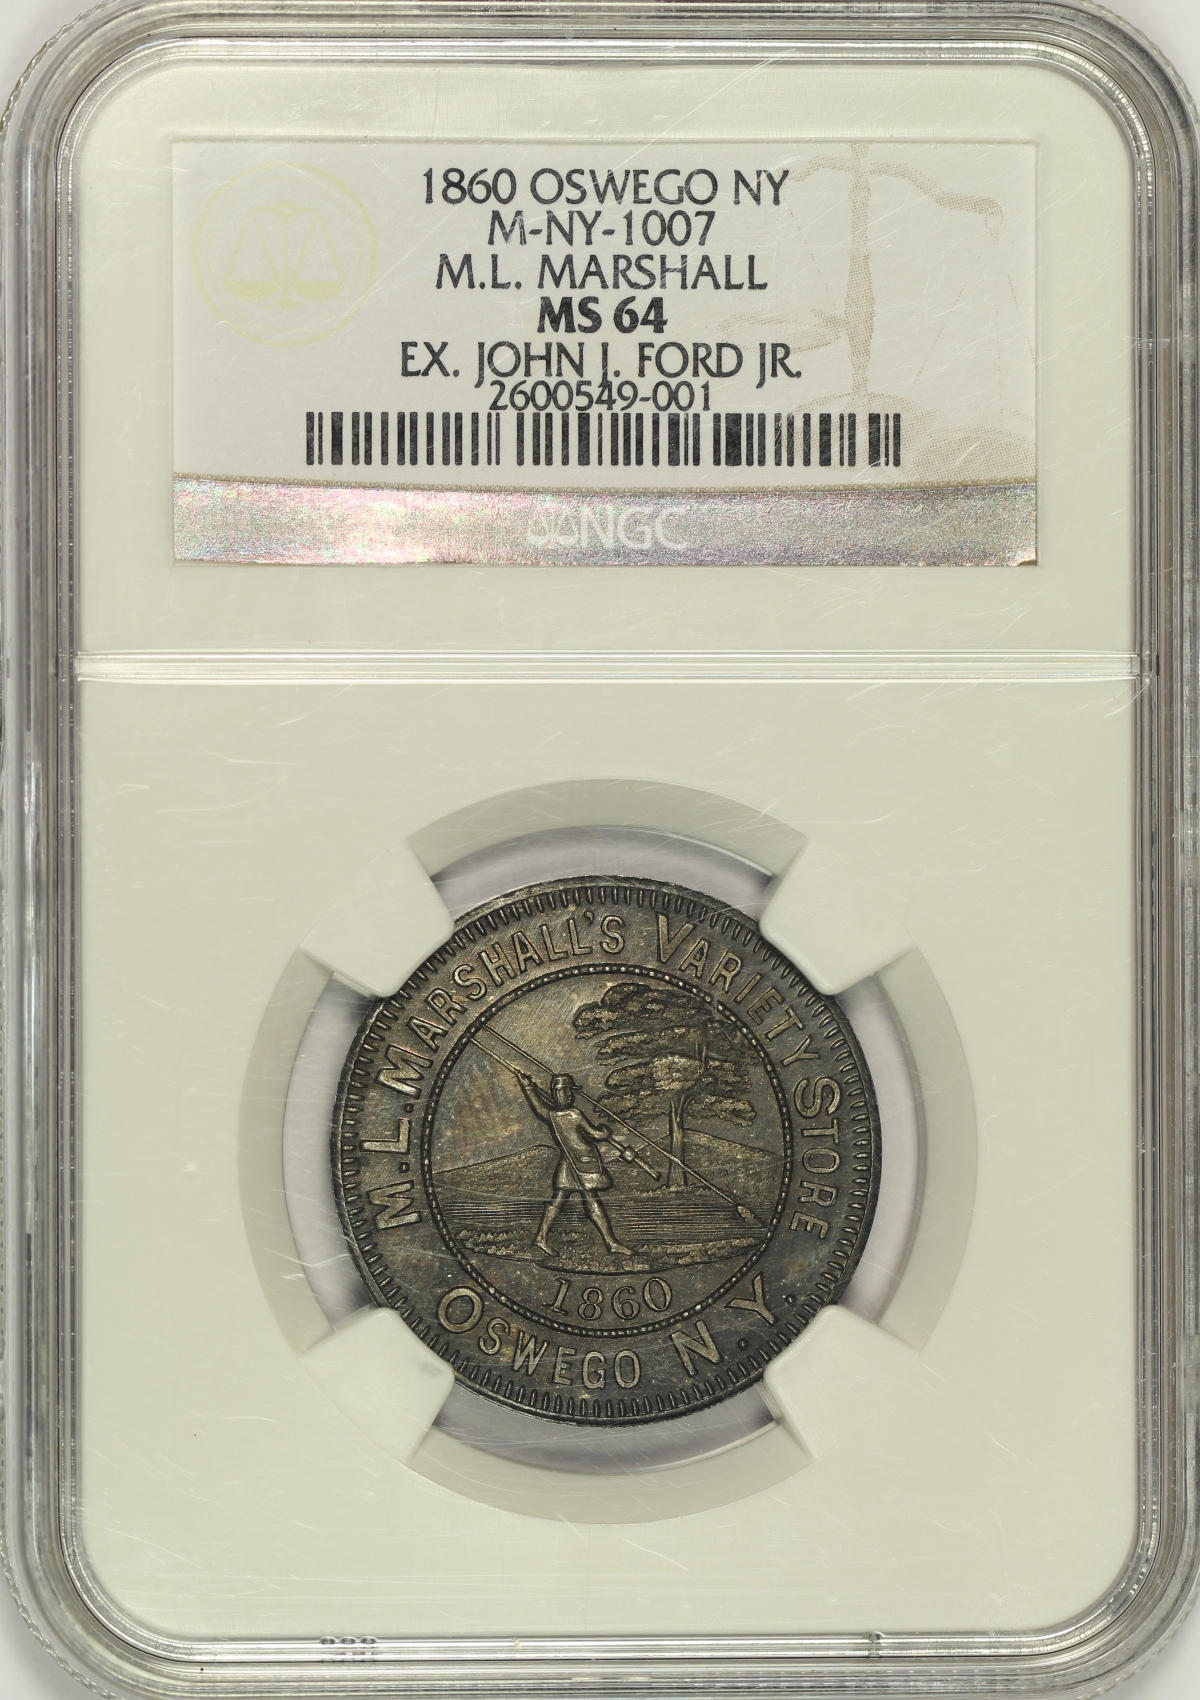 Michael Kittle Rare Coins - 1860 M.L. Marshall Oswego M-NY ...